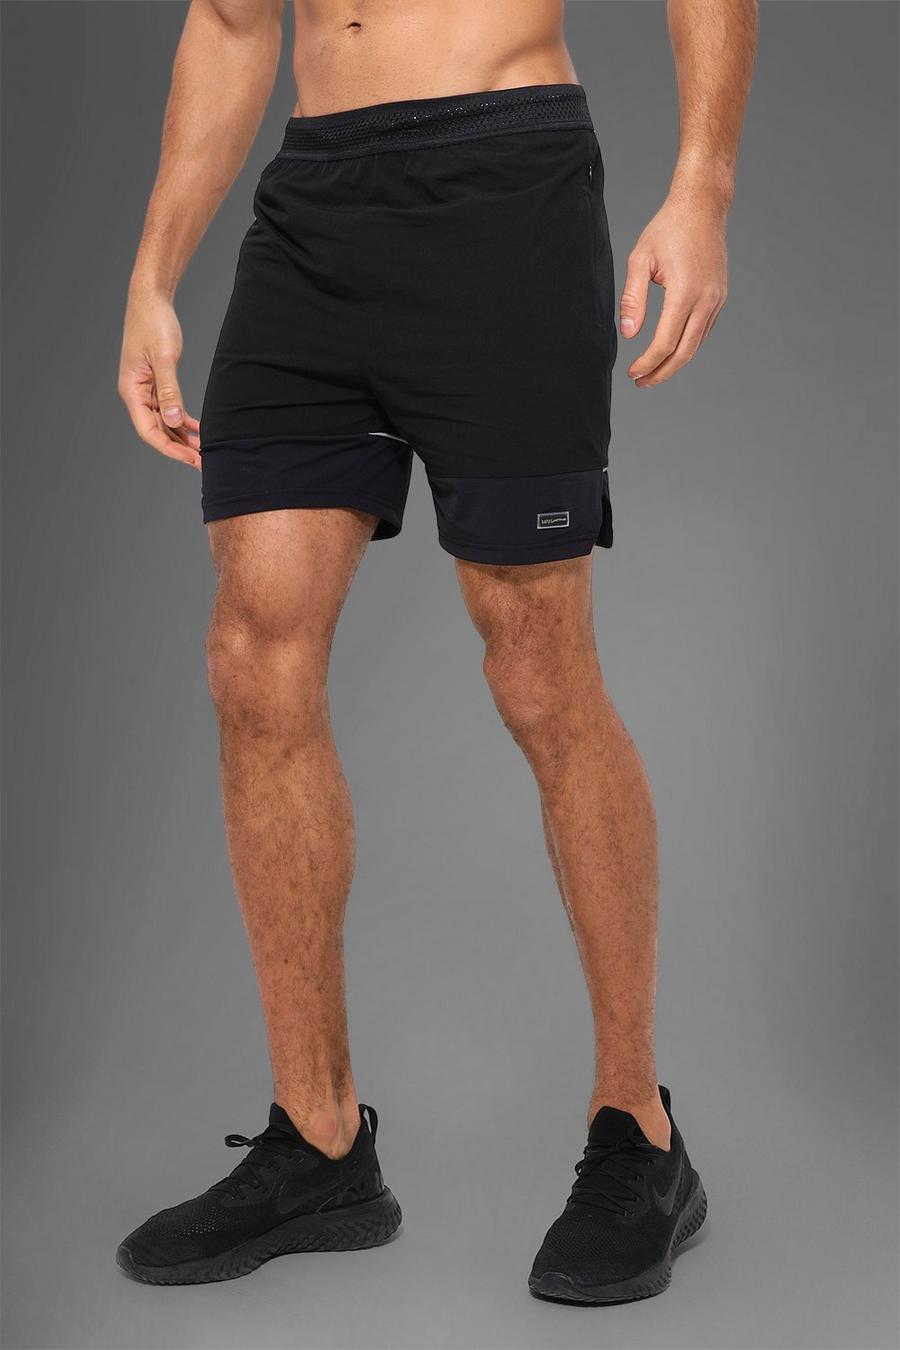 Pantalón corto MAN Active deportivo de nailon resistente, Black nero